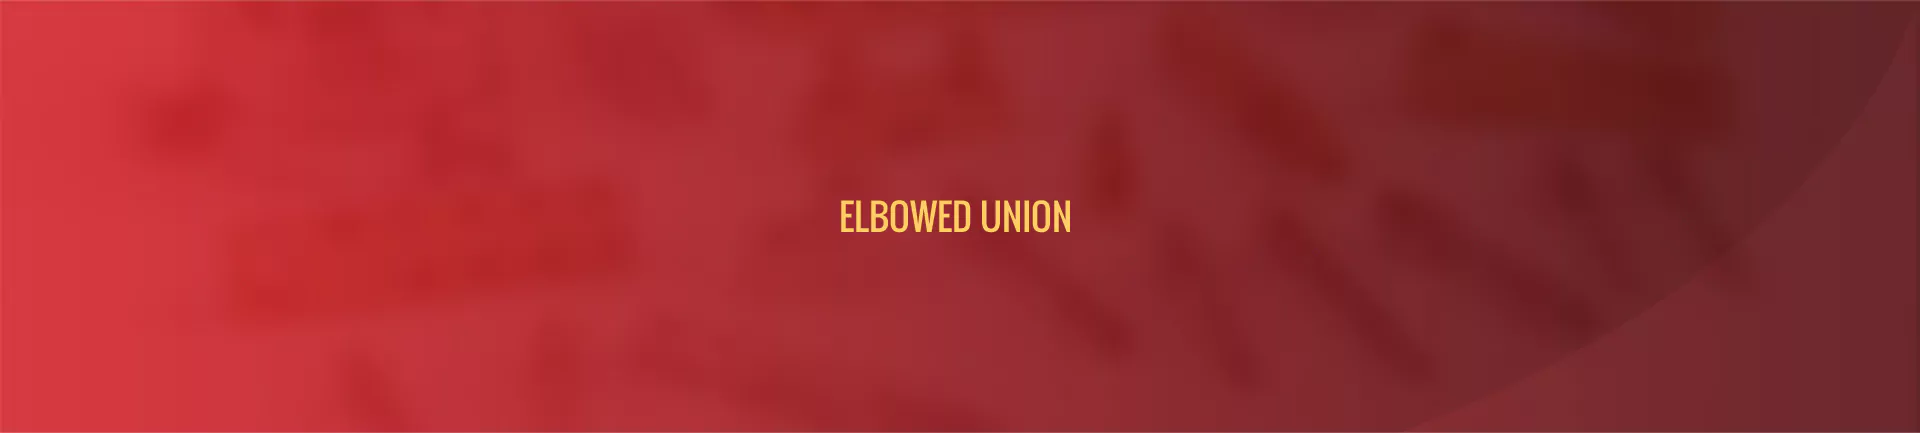 elbowed_union-banner